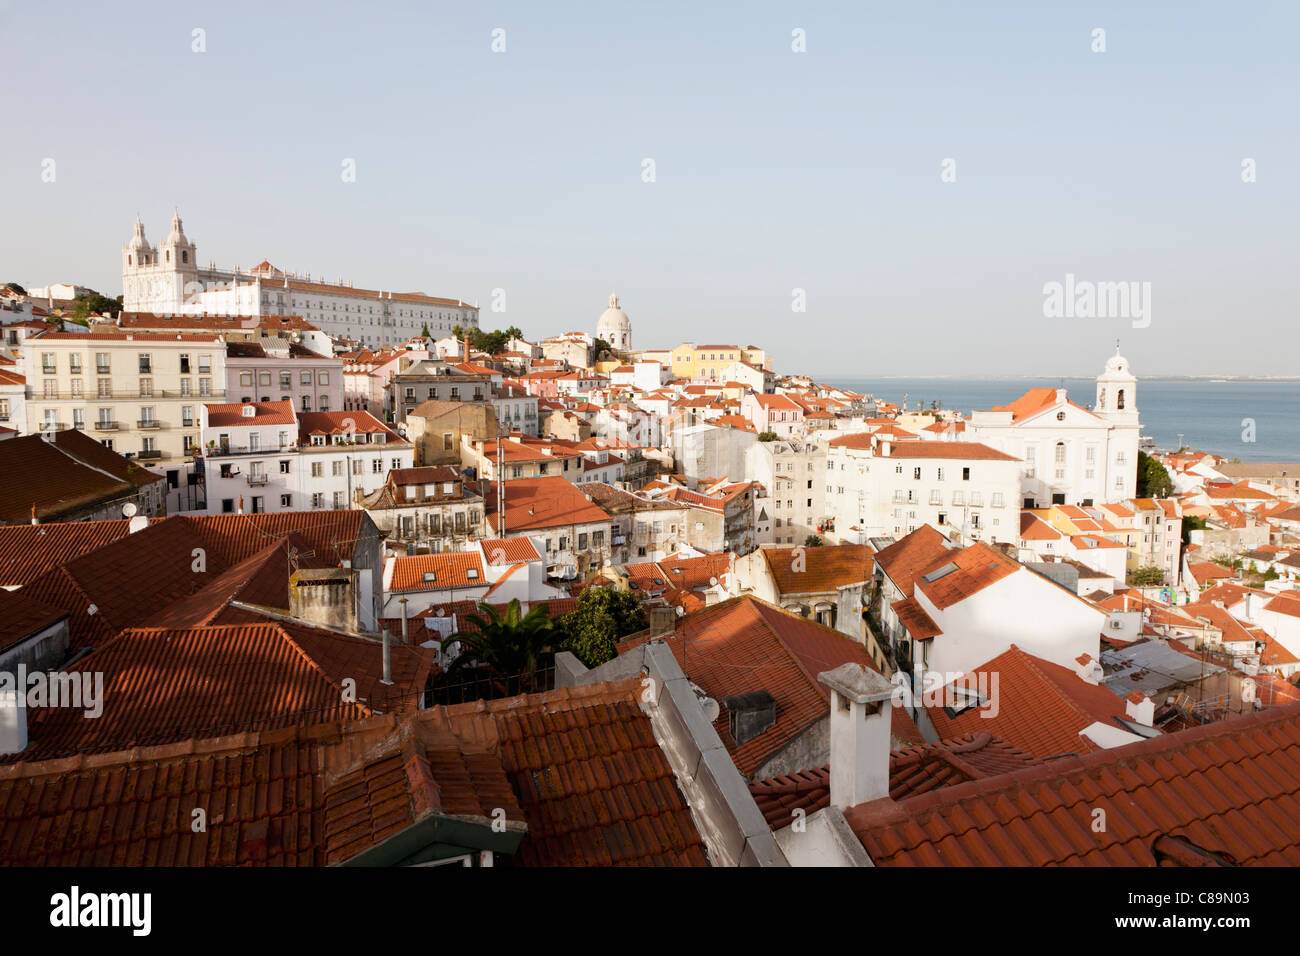 Europa, Portugal, Lissabon, Alfama, Blick auf Stadt mit Kirche von São Vicente de Fora und Kirche Santo Estevao Stockfoto